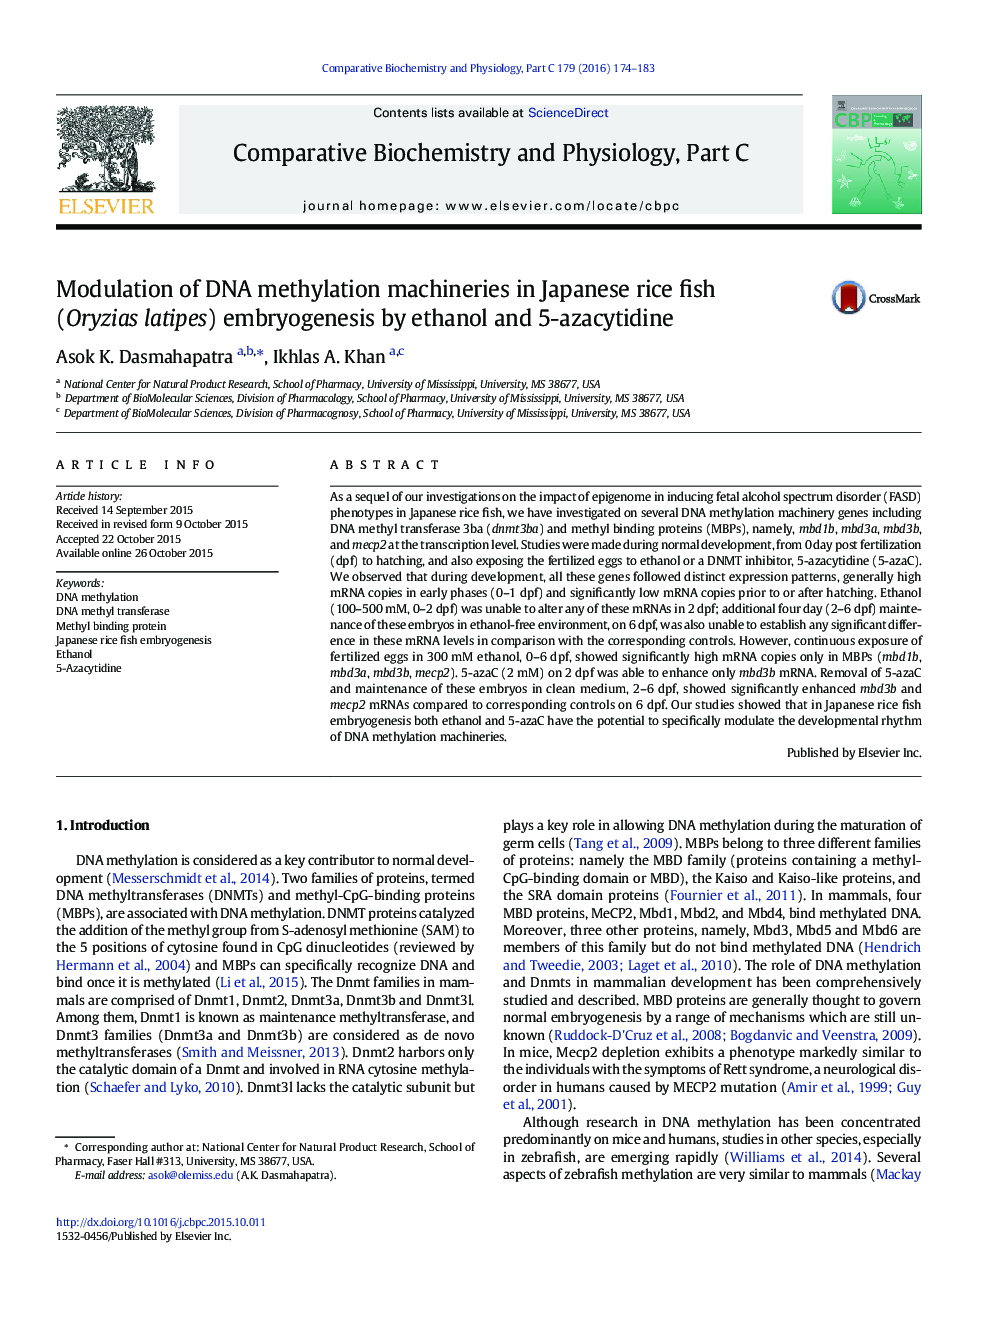 Modulation of DNA methylation machineries in Japanese rice fish (Oryzias latipes) embryogenesis by ethanol and 5-azacytidine